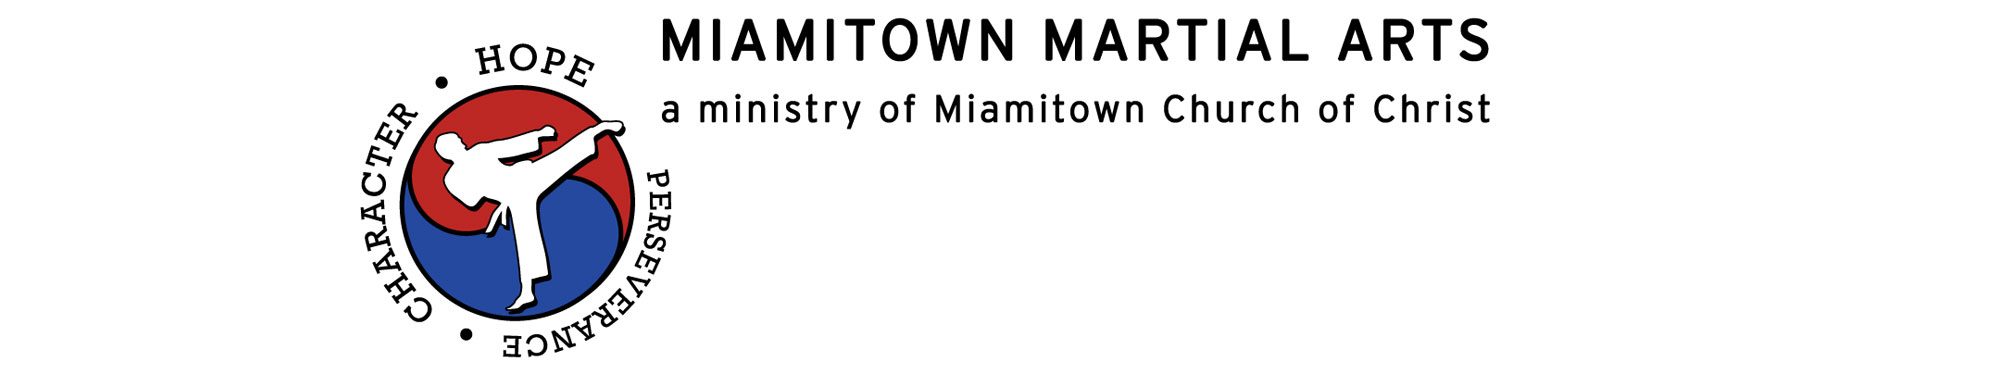 Miamitown Martial Arts Ministry